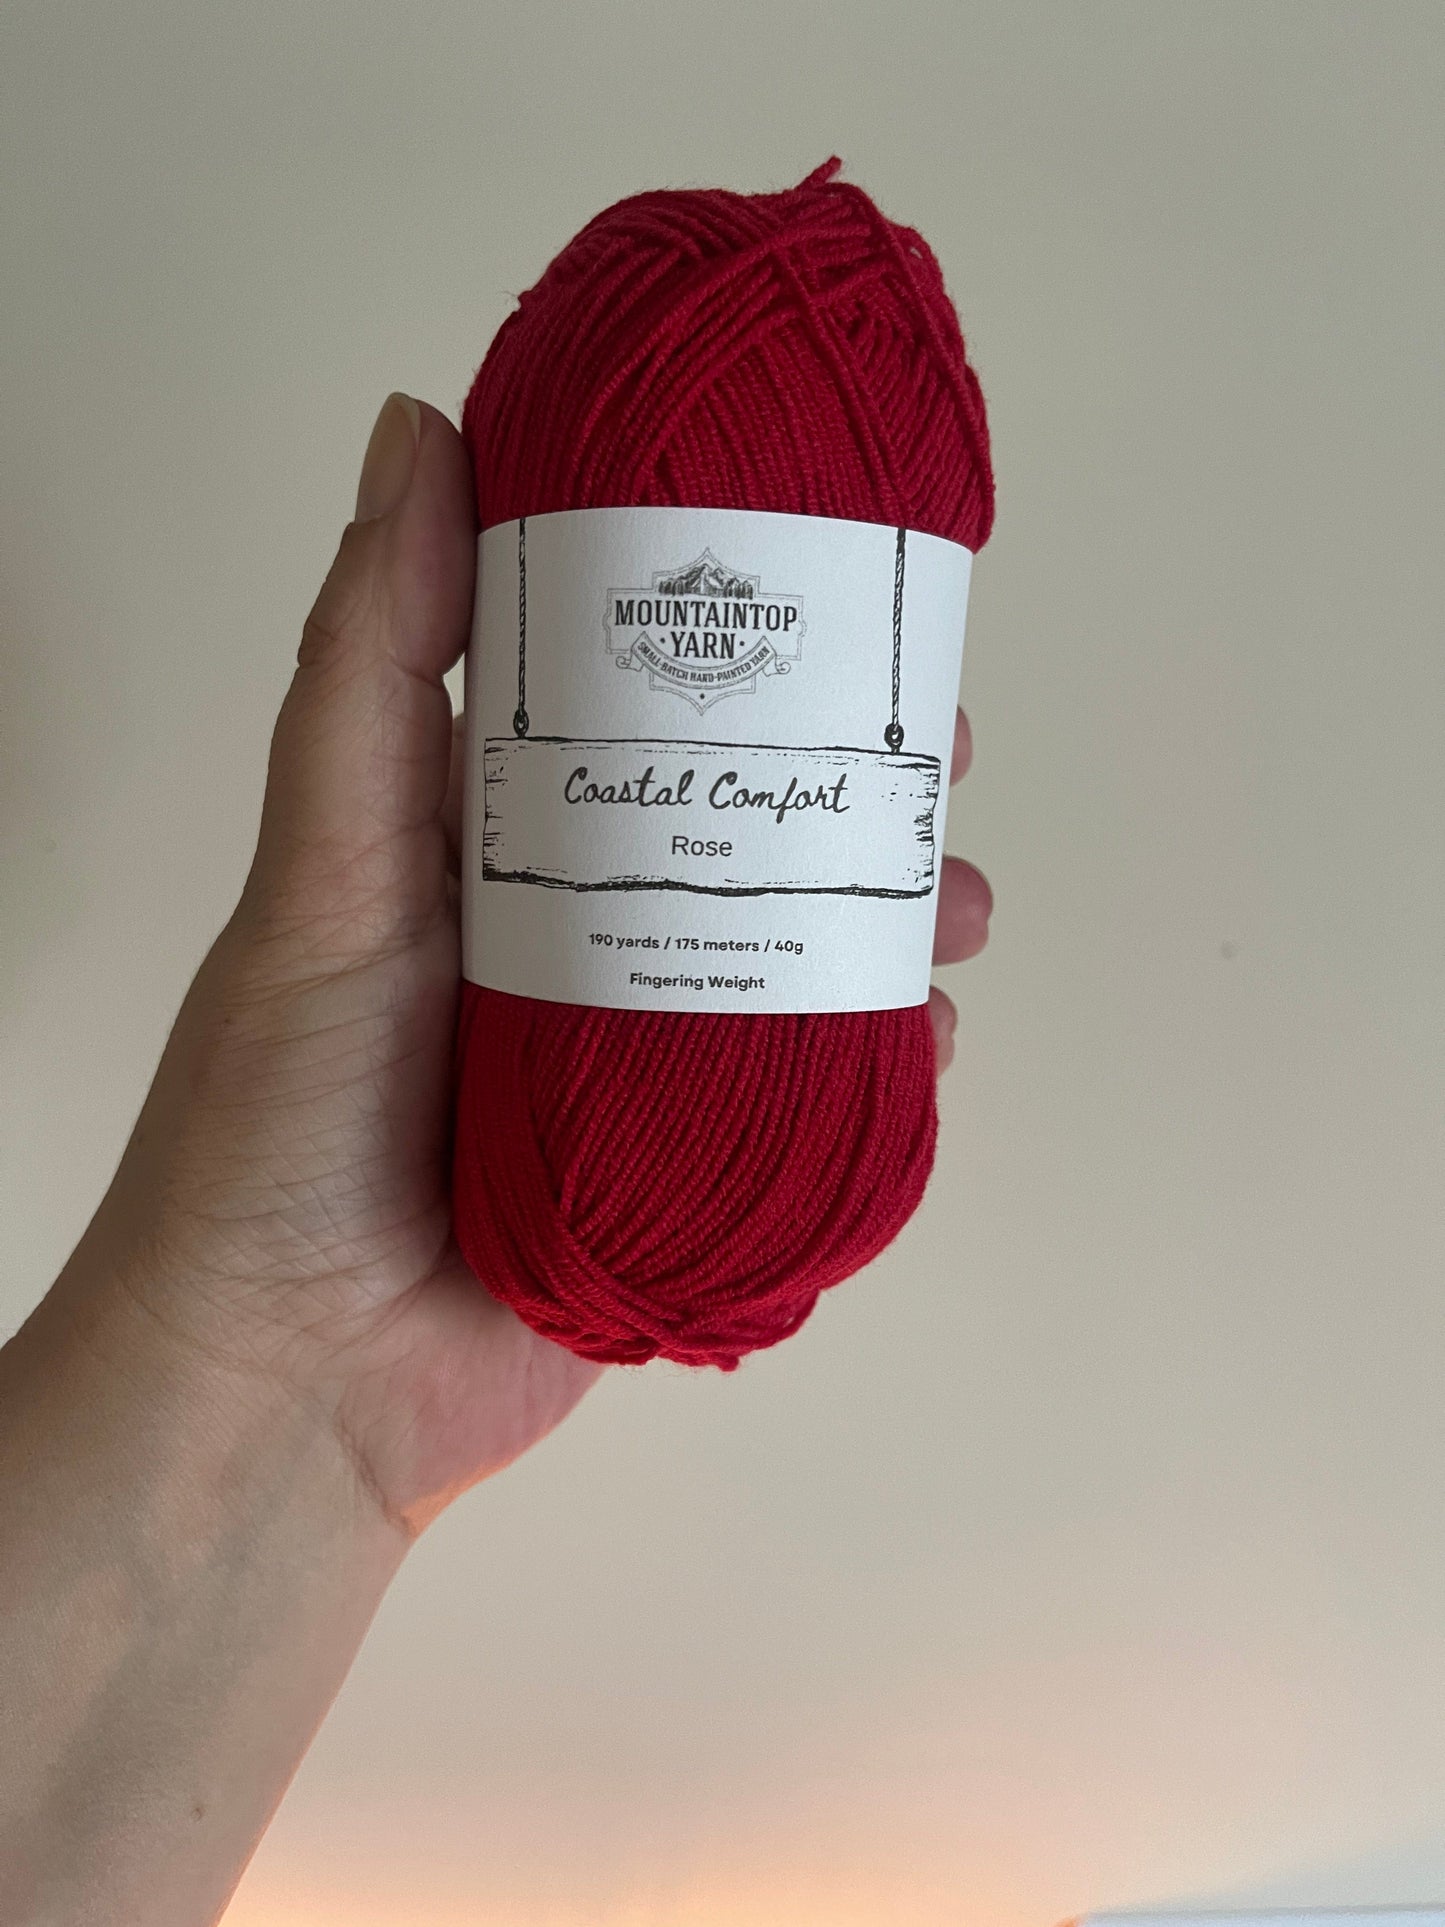 Mountaintop Yarn Rose Coastal Comfort - Cotton and Acrylic Blend Yarn Yarn